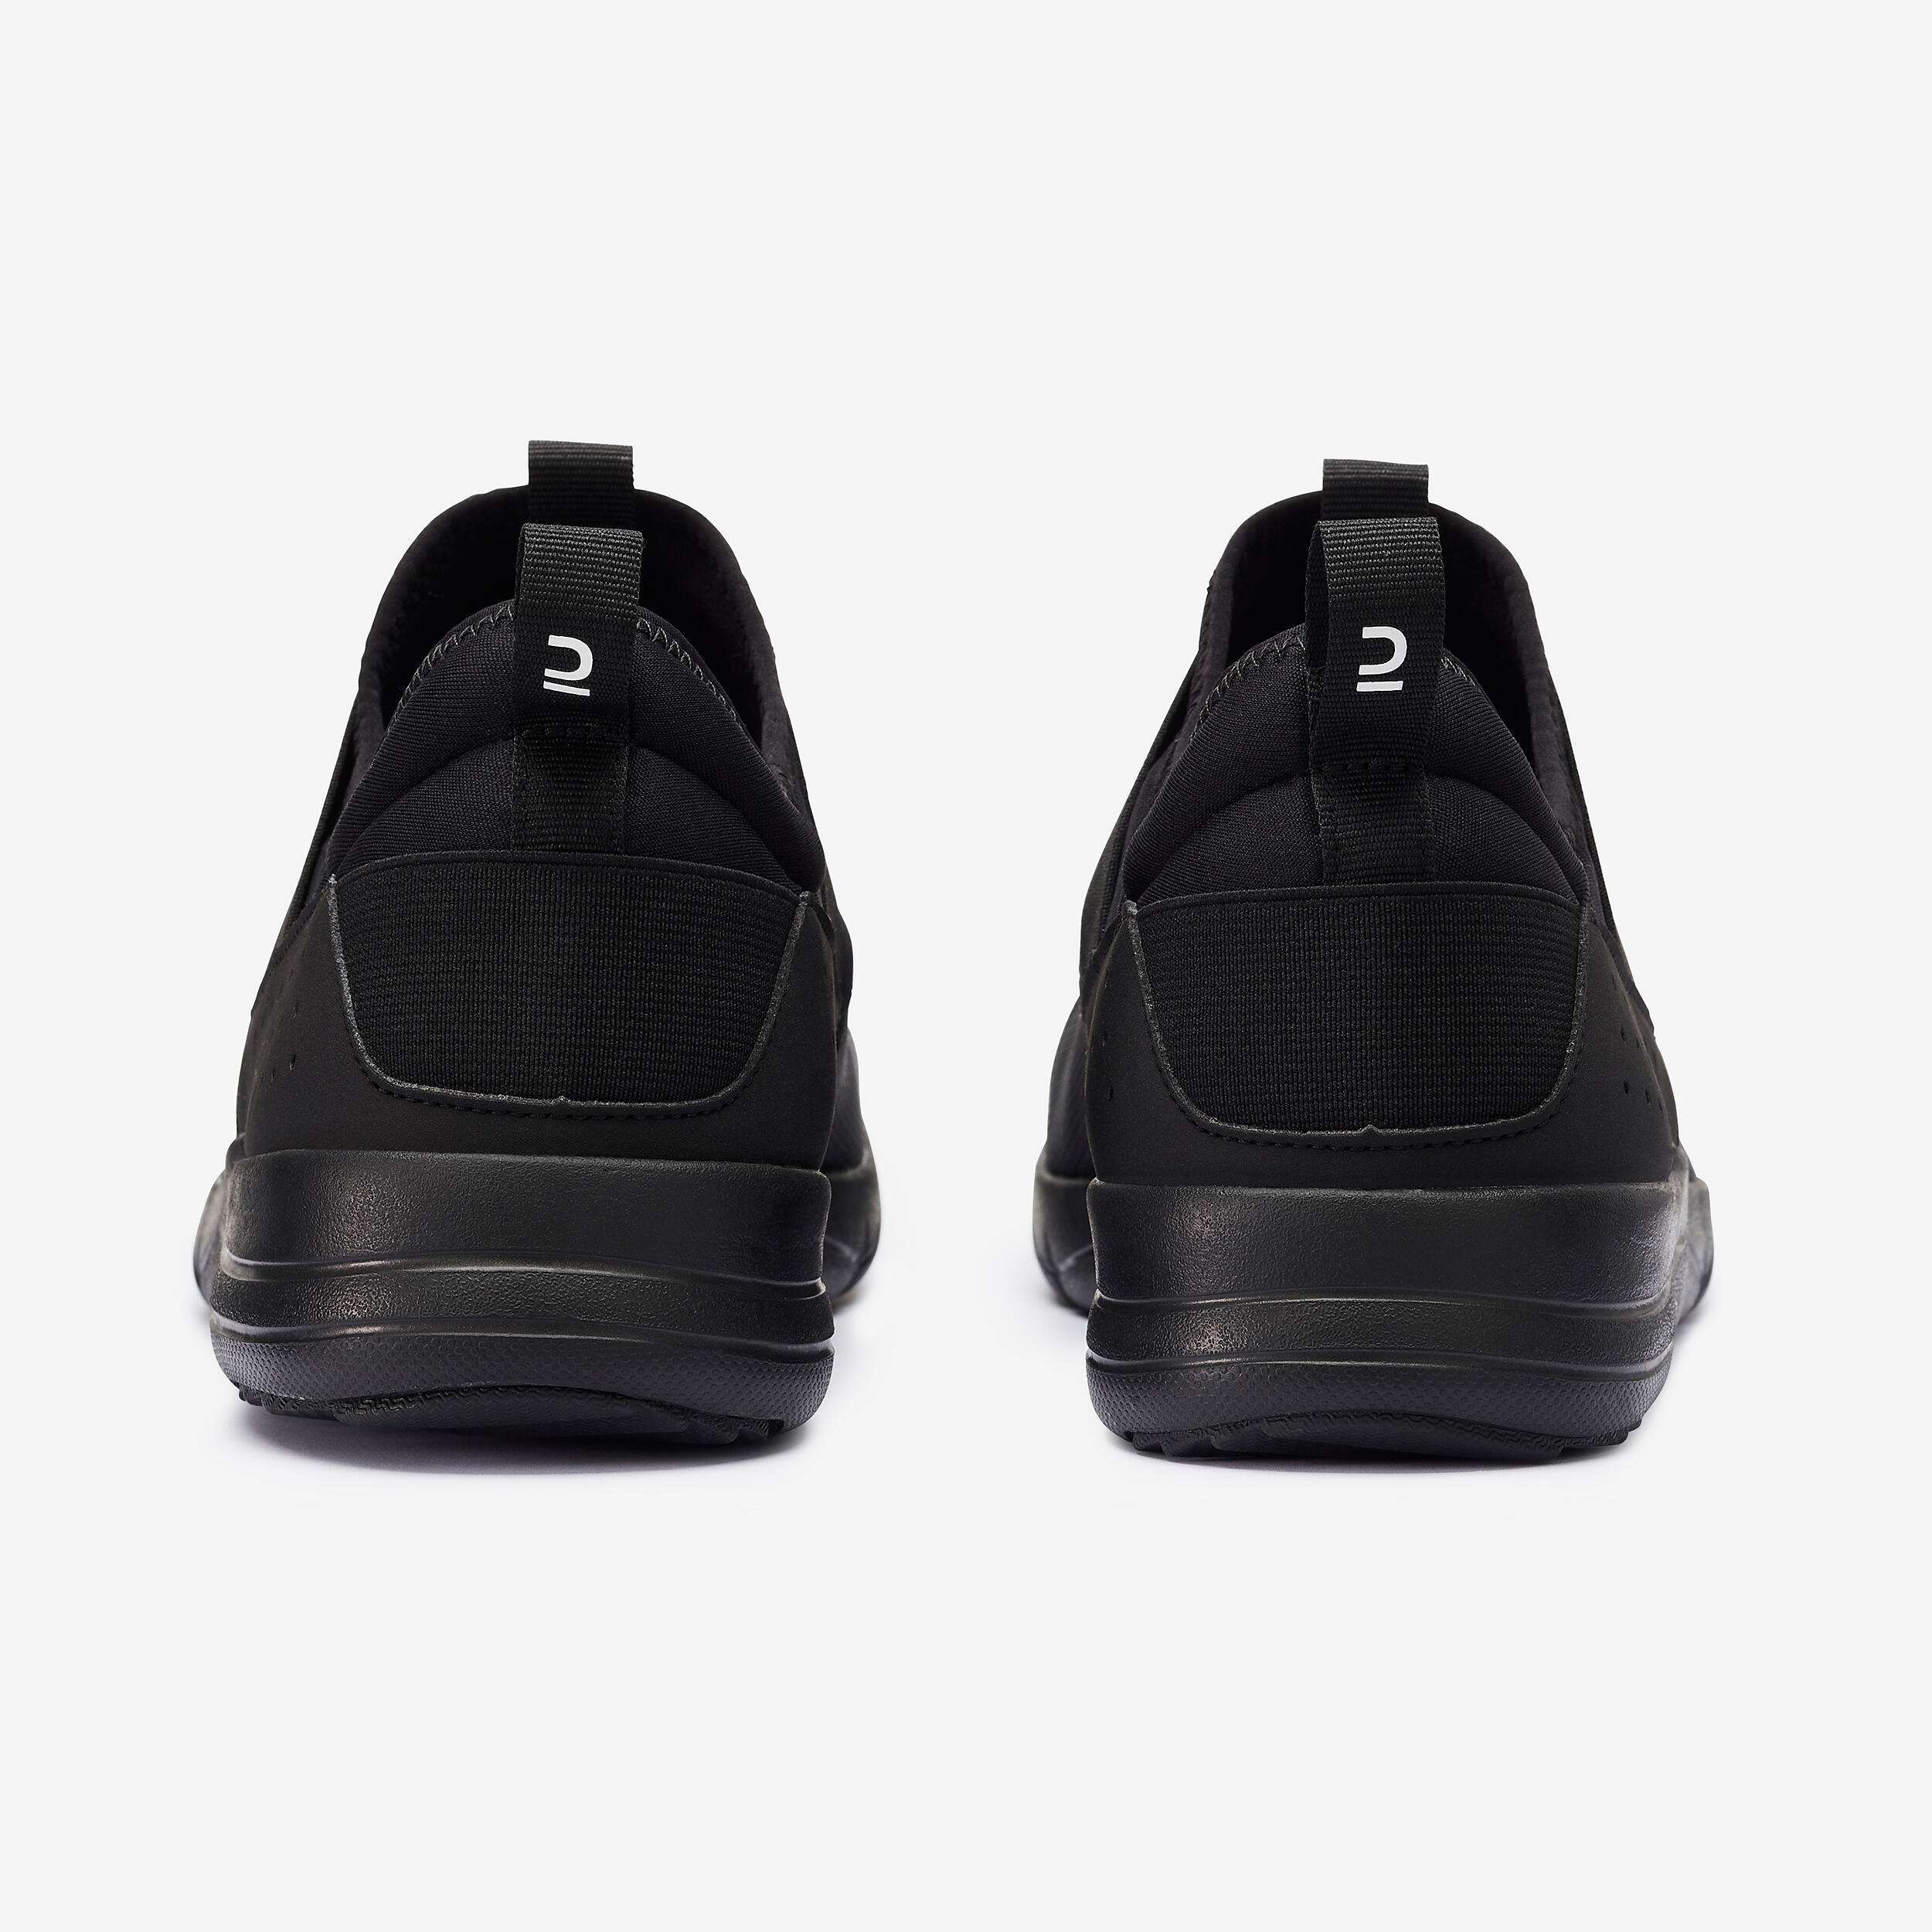 PW 160 Slip-On men's Fitness walking shoes - black 6/9